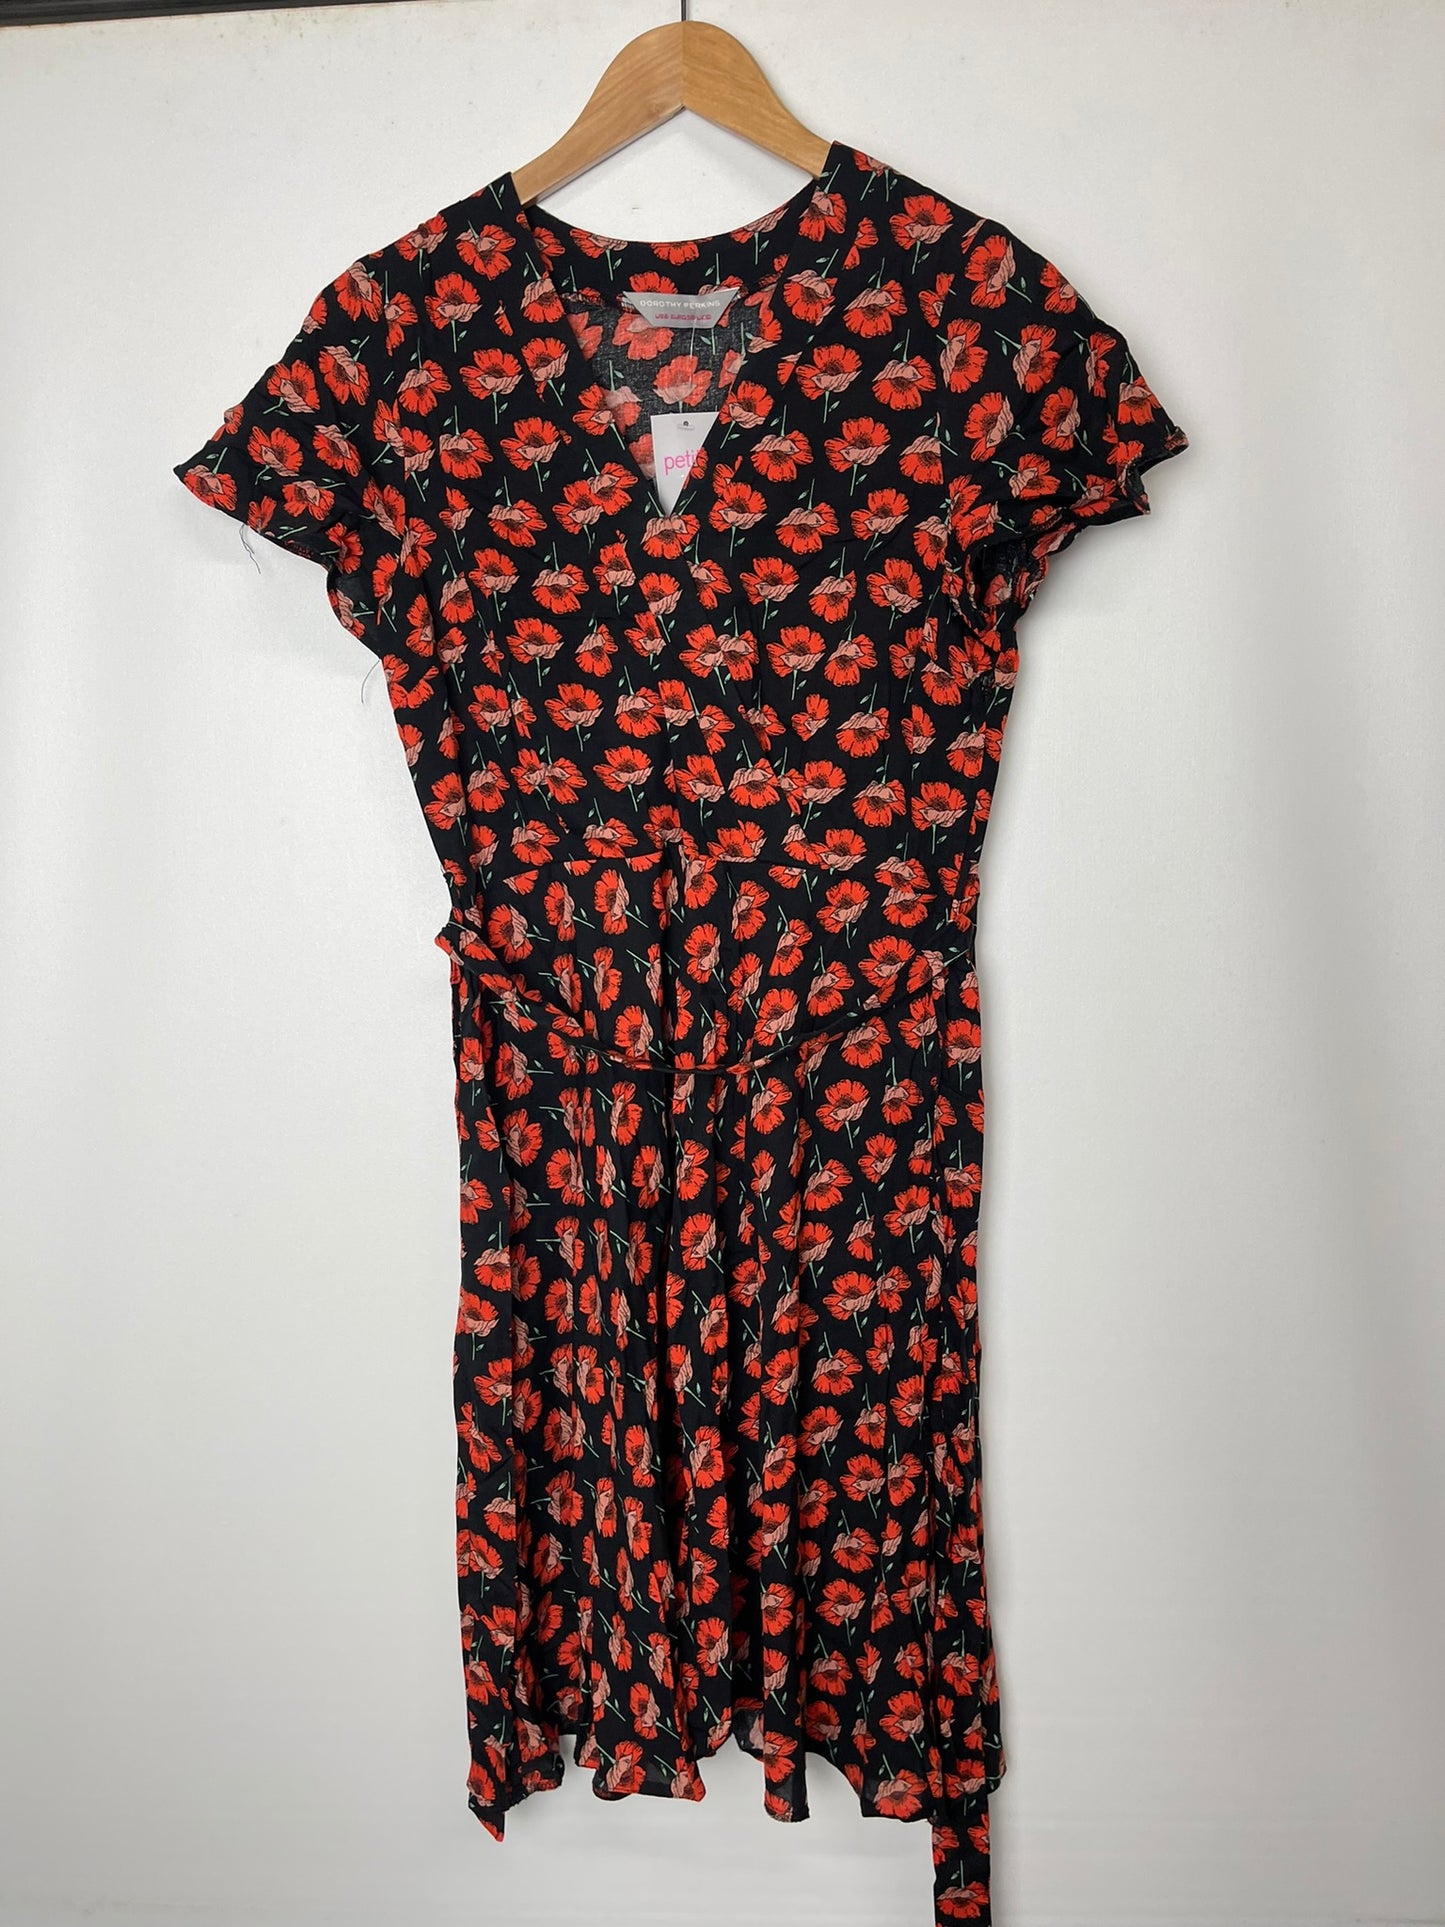 BNWT Dorothy Perkins Black and Orange Floral Dress Size 10